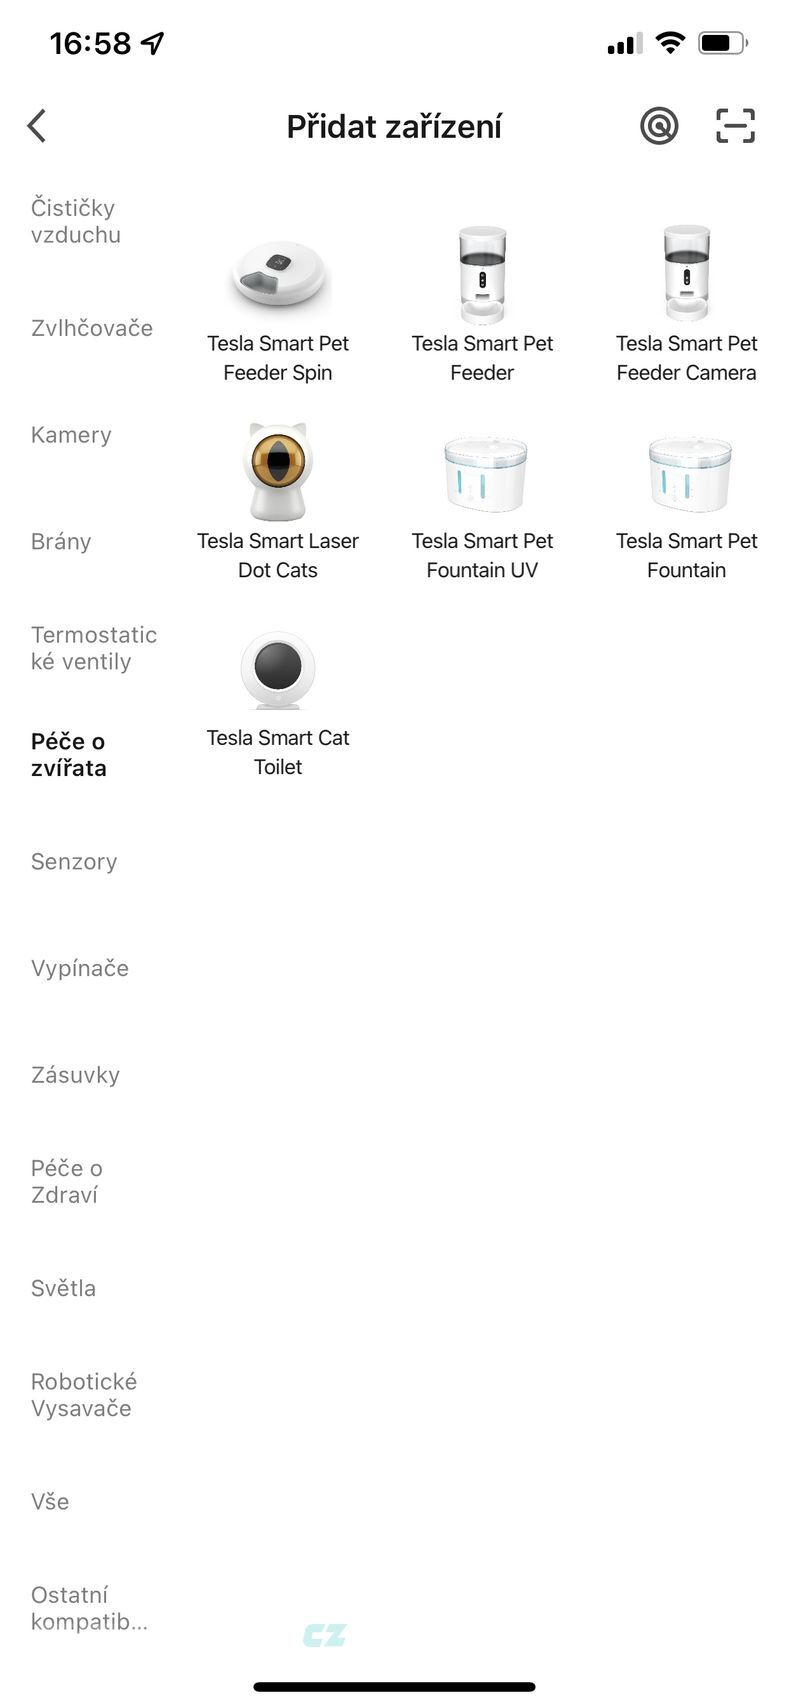 Tesla Smart Pet Feeder Camera